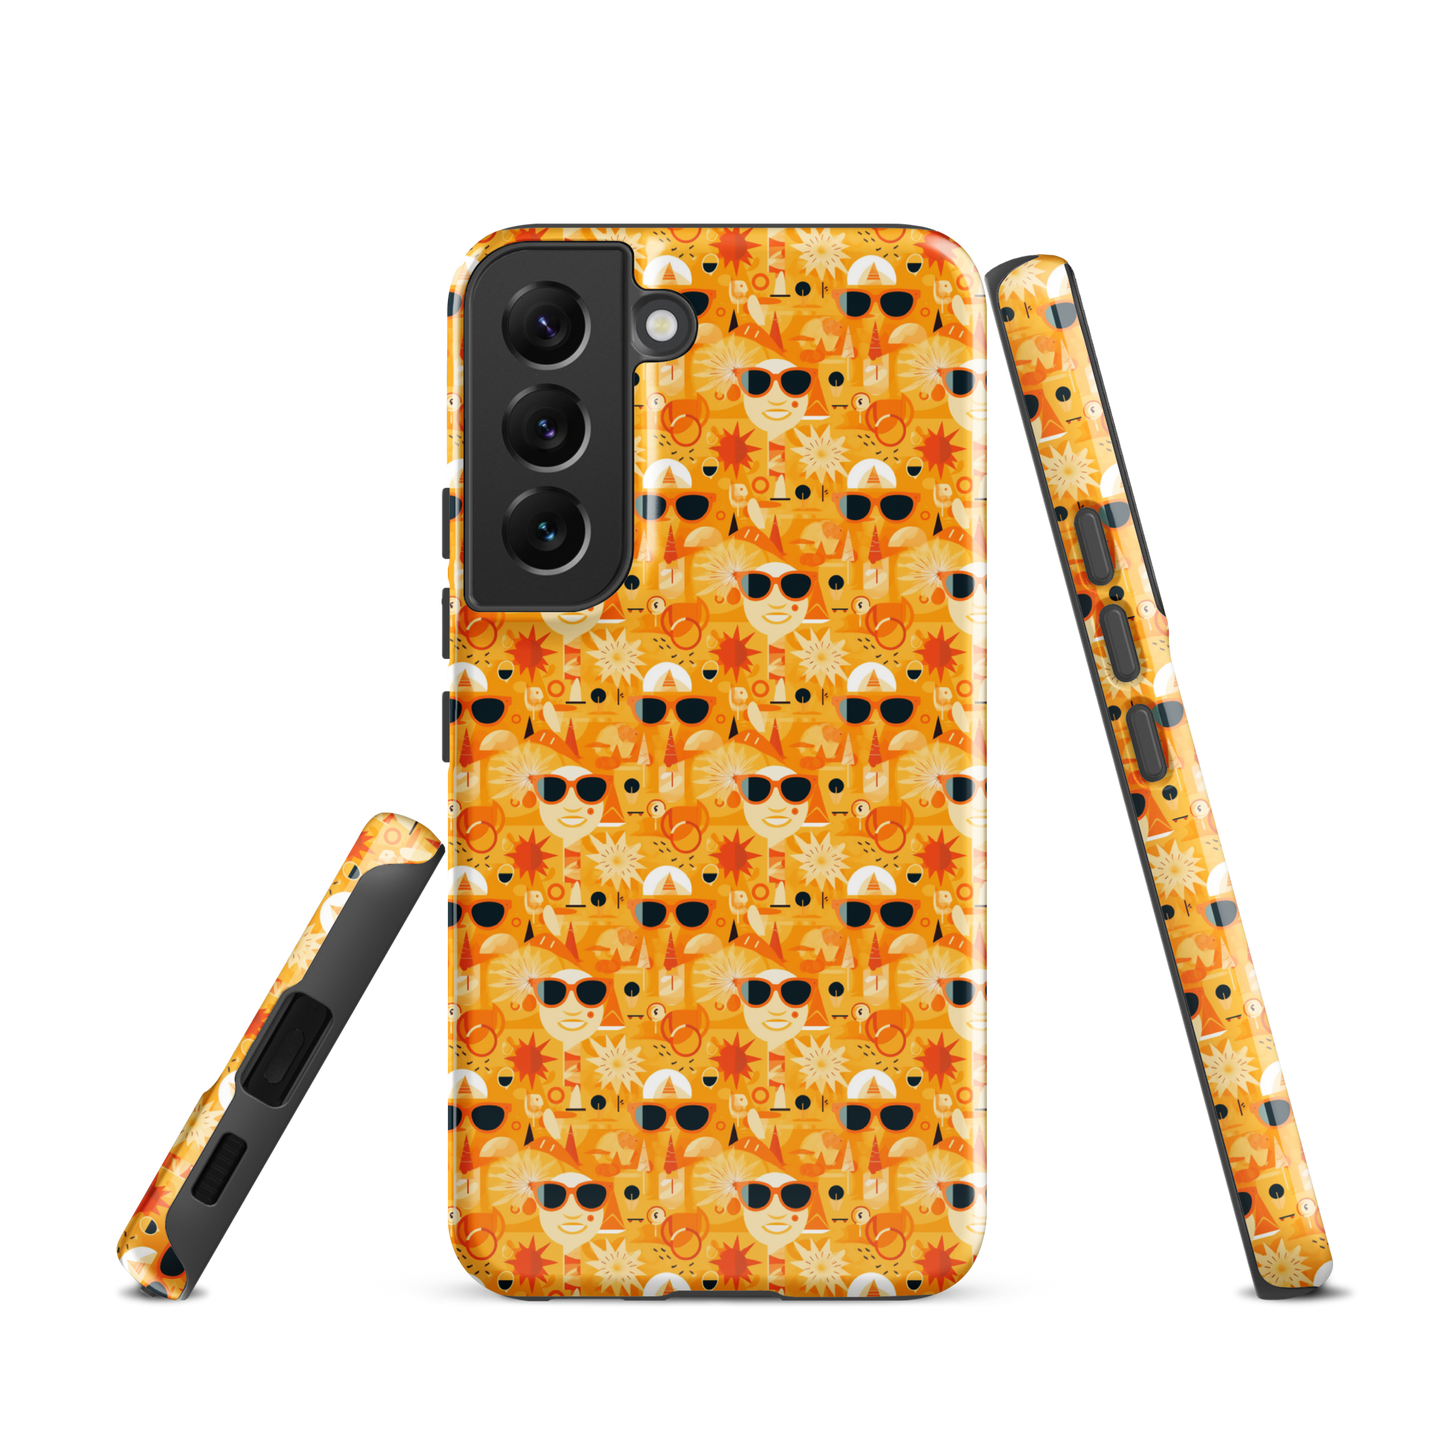 Sol Tough Case, Shockproof Phone Case,Cool Designed Phone Cases, Pocket-friendly